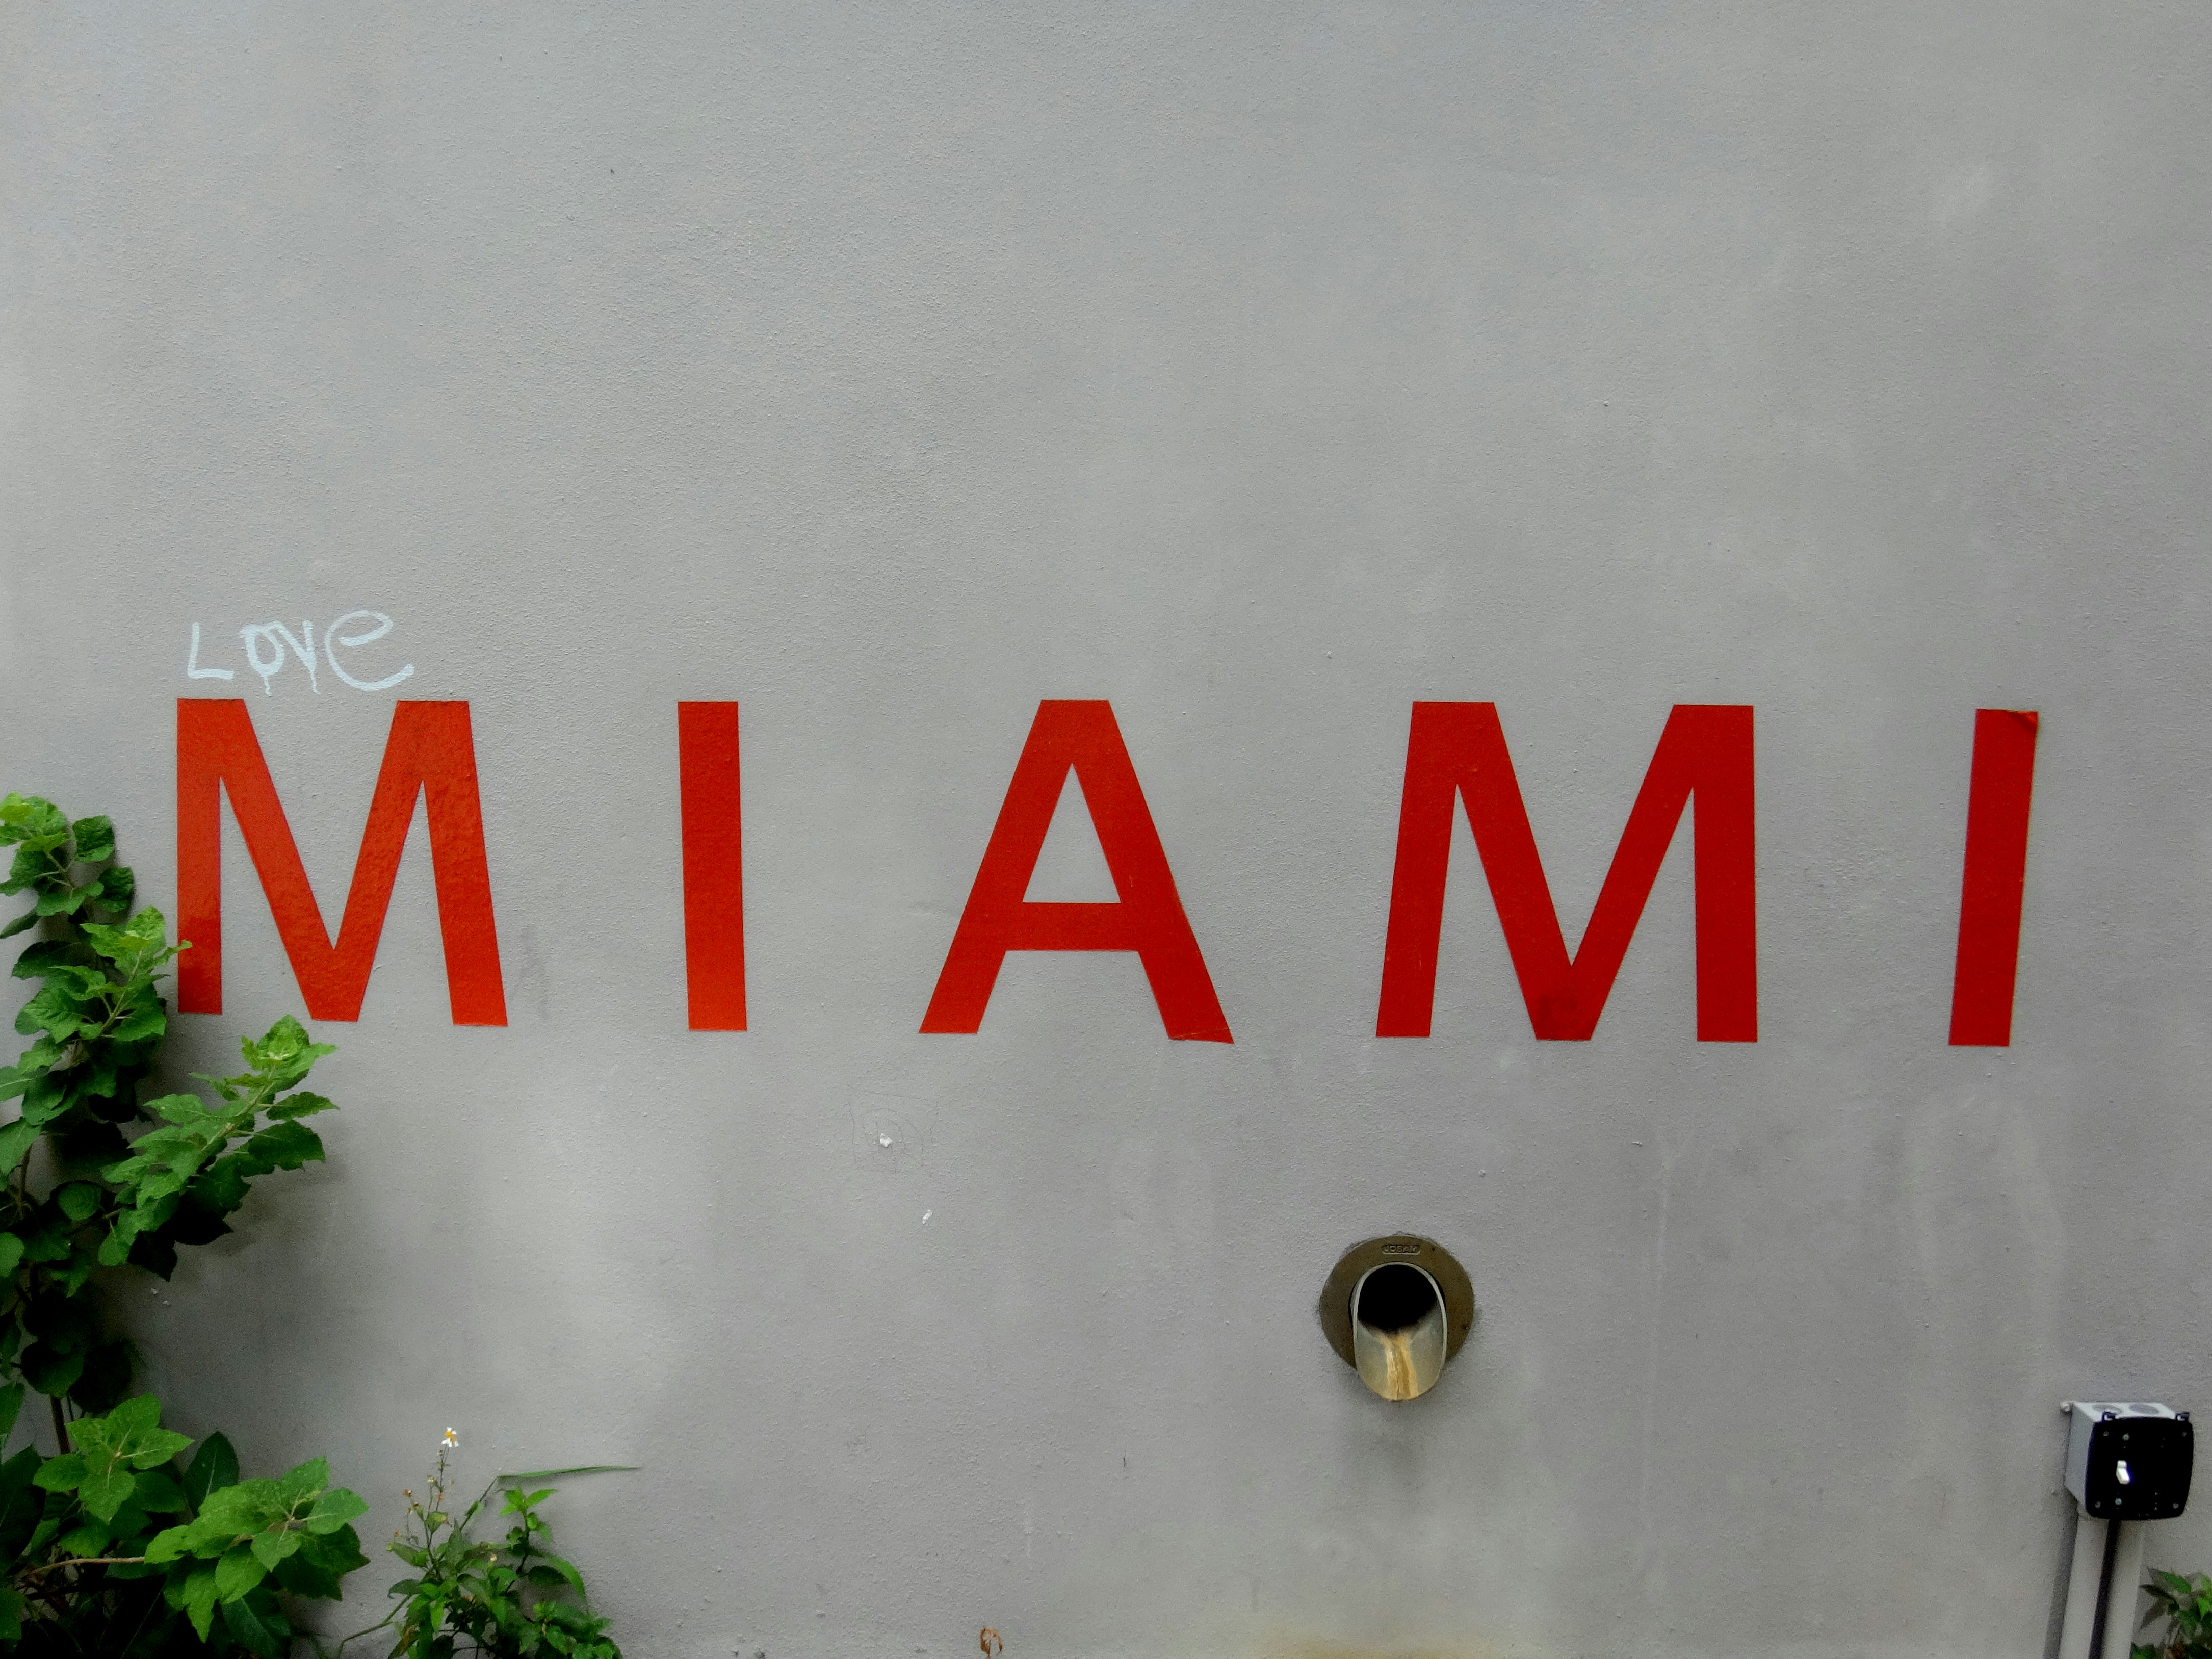 love Miami wall decor near green leaf plant